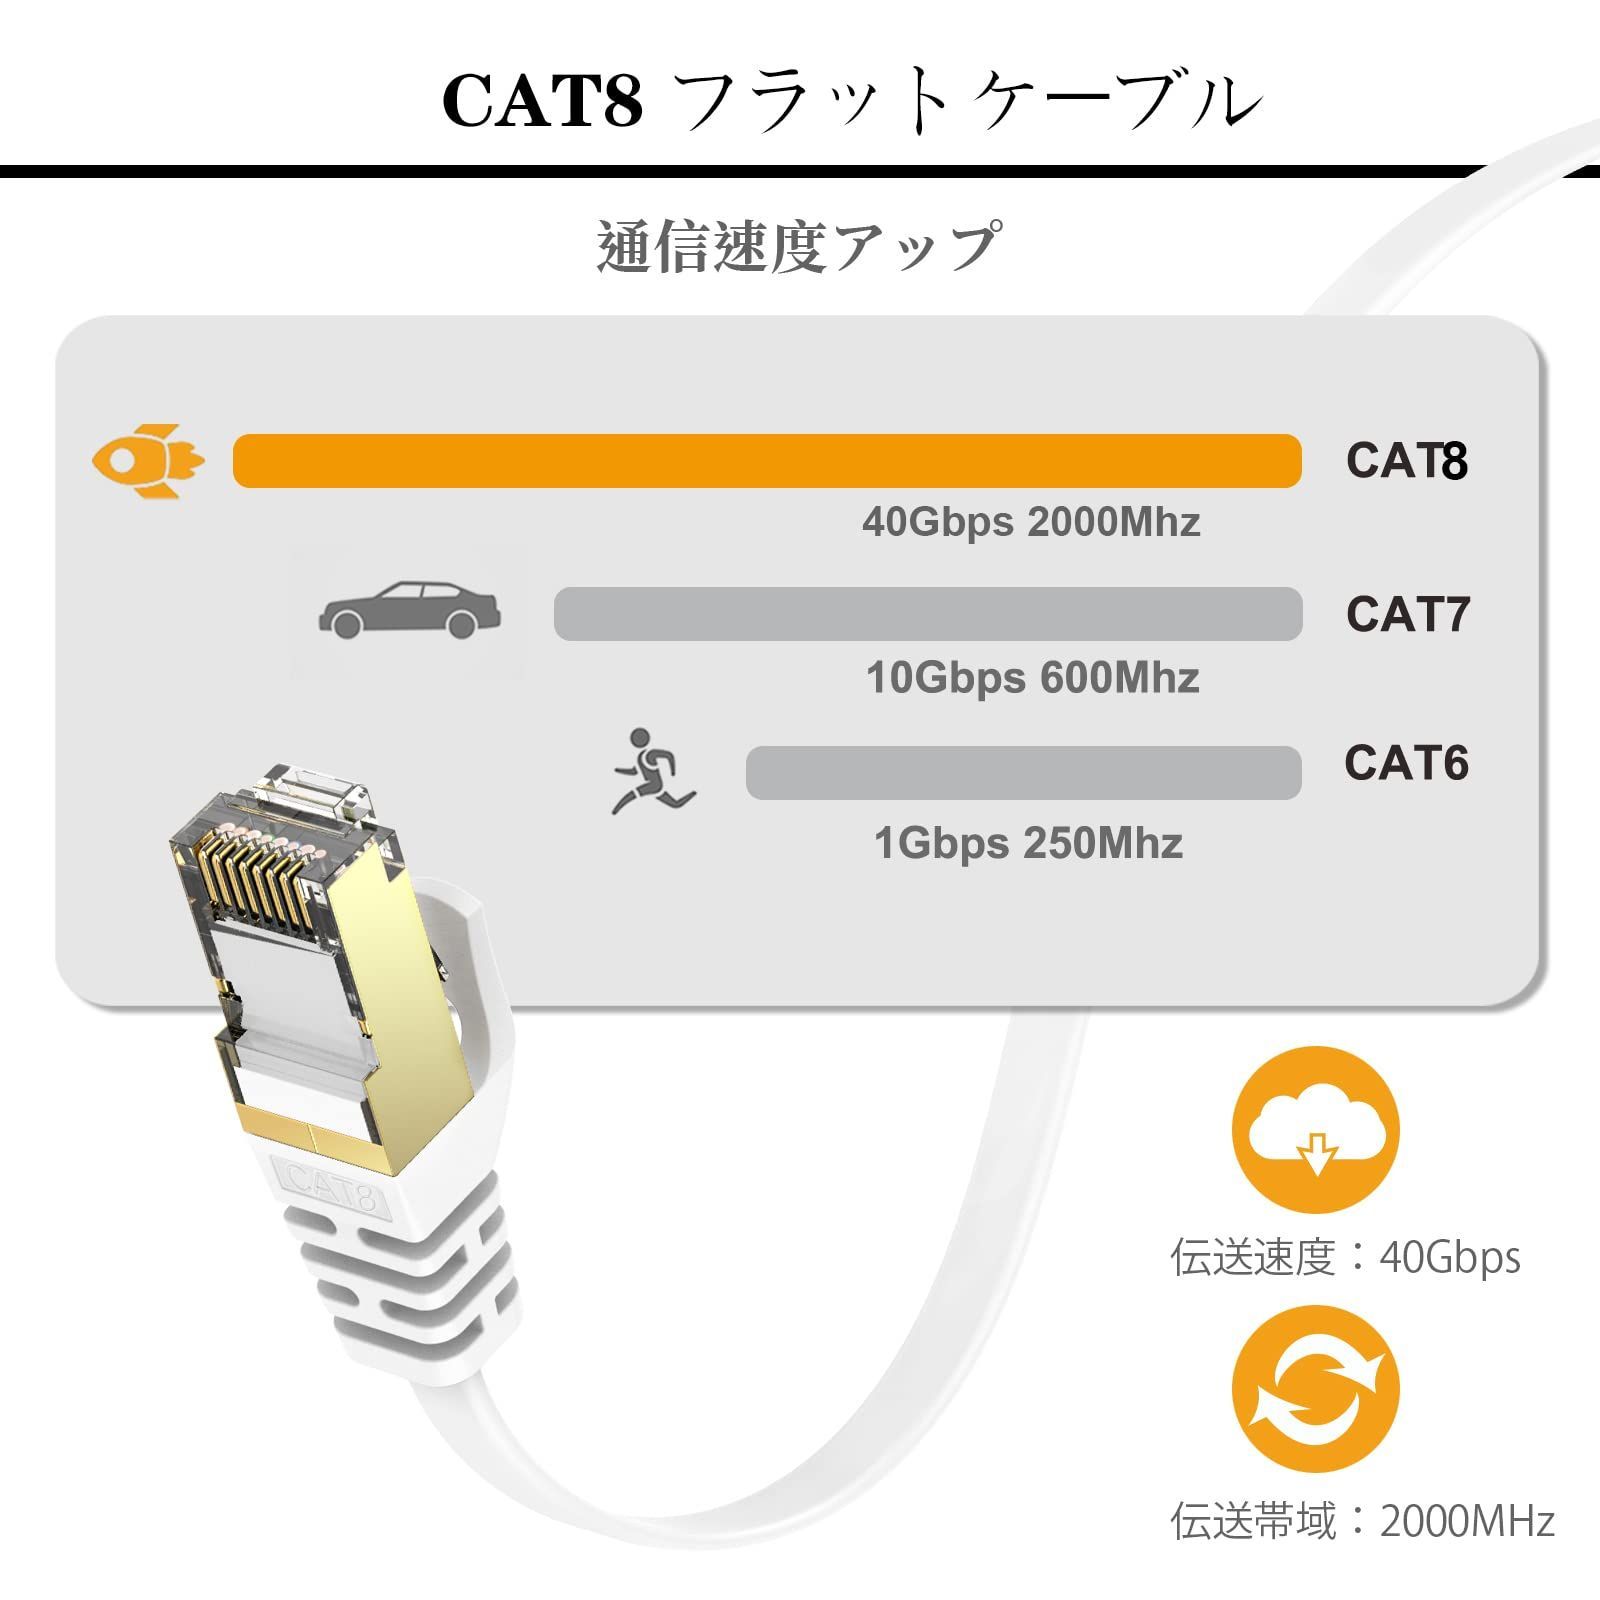 LANケーブル 10m Cat 8標準 Siricook 有線ケーブル ランケーブル 10メートル 白 インターネット 高速 らんけーぶる ホワイト